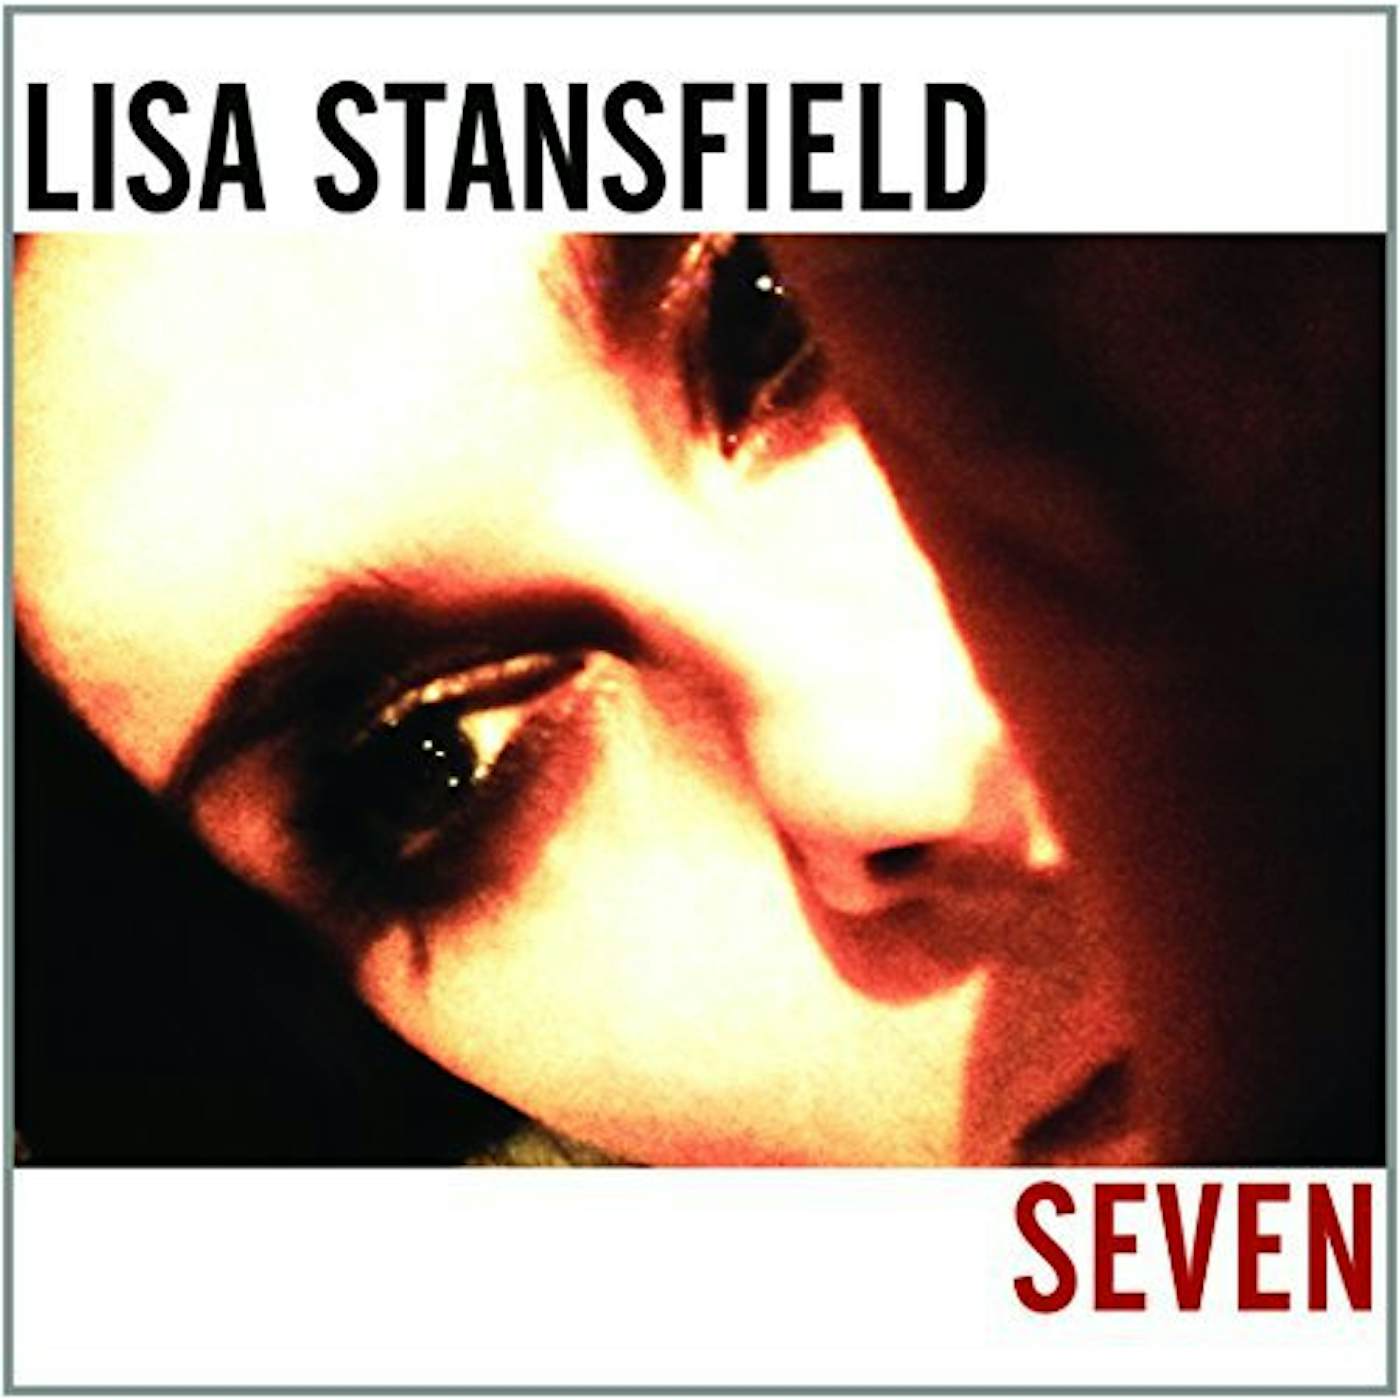 Lisa Stansfield Seven Vinyl Record